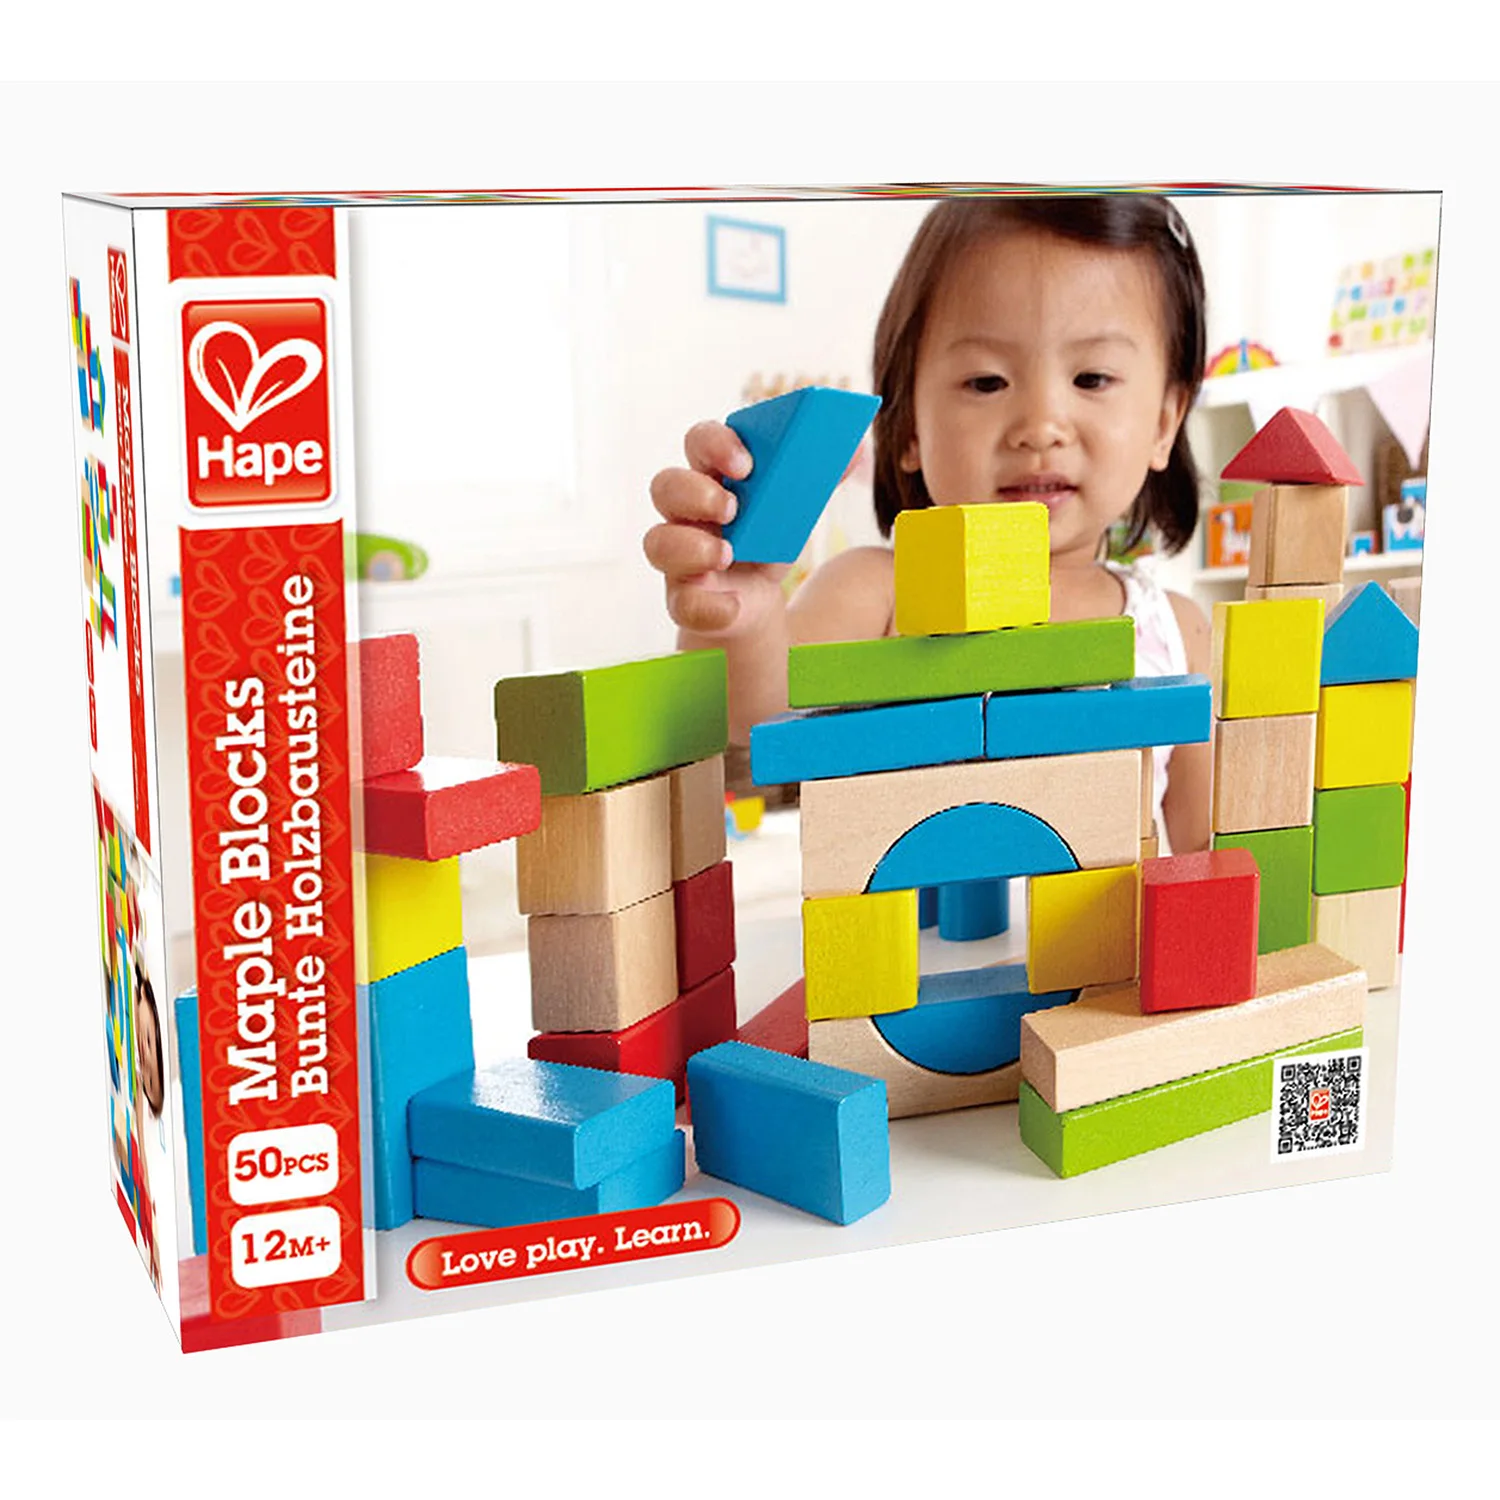 Hape Wholesale Kids Rainbow Color Cheap Wooden Blocks Toy,Wooden Building Blocks